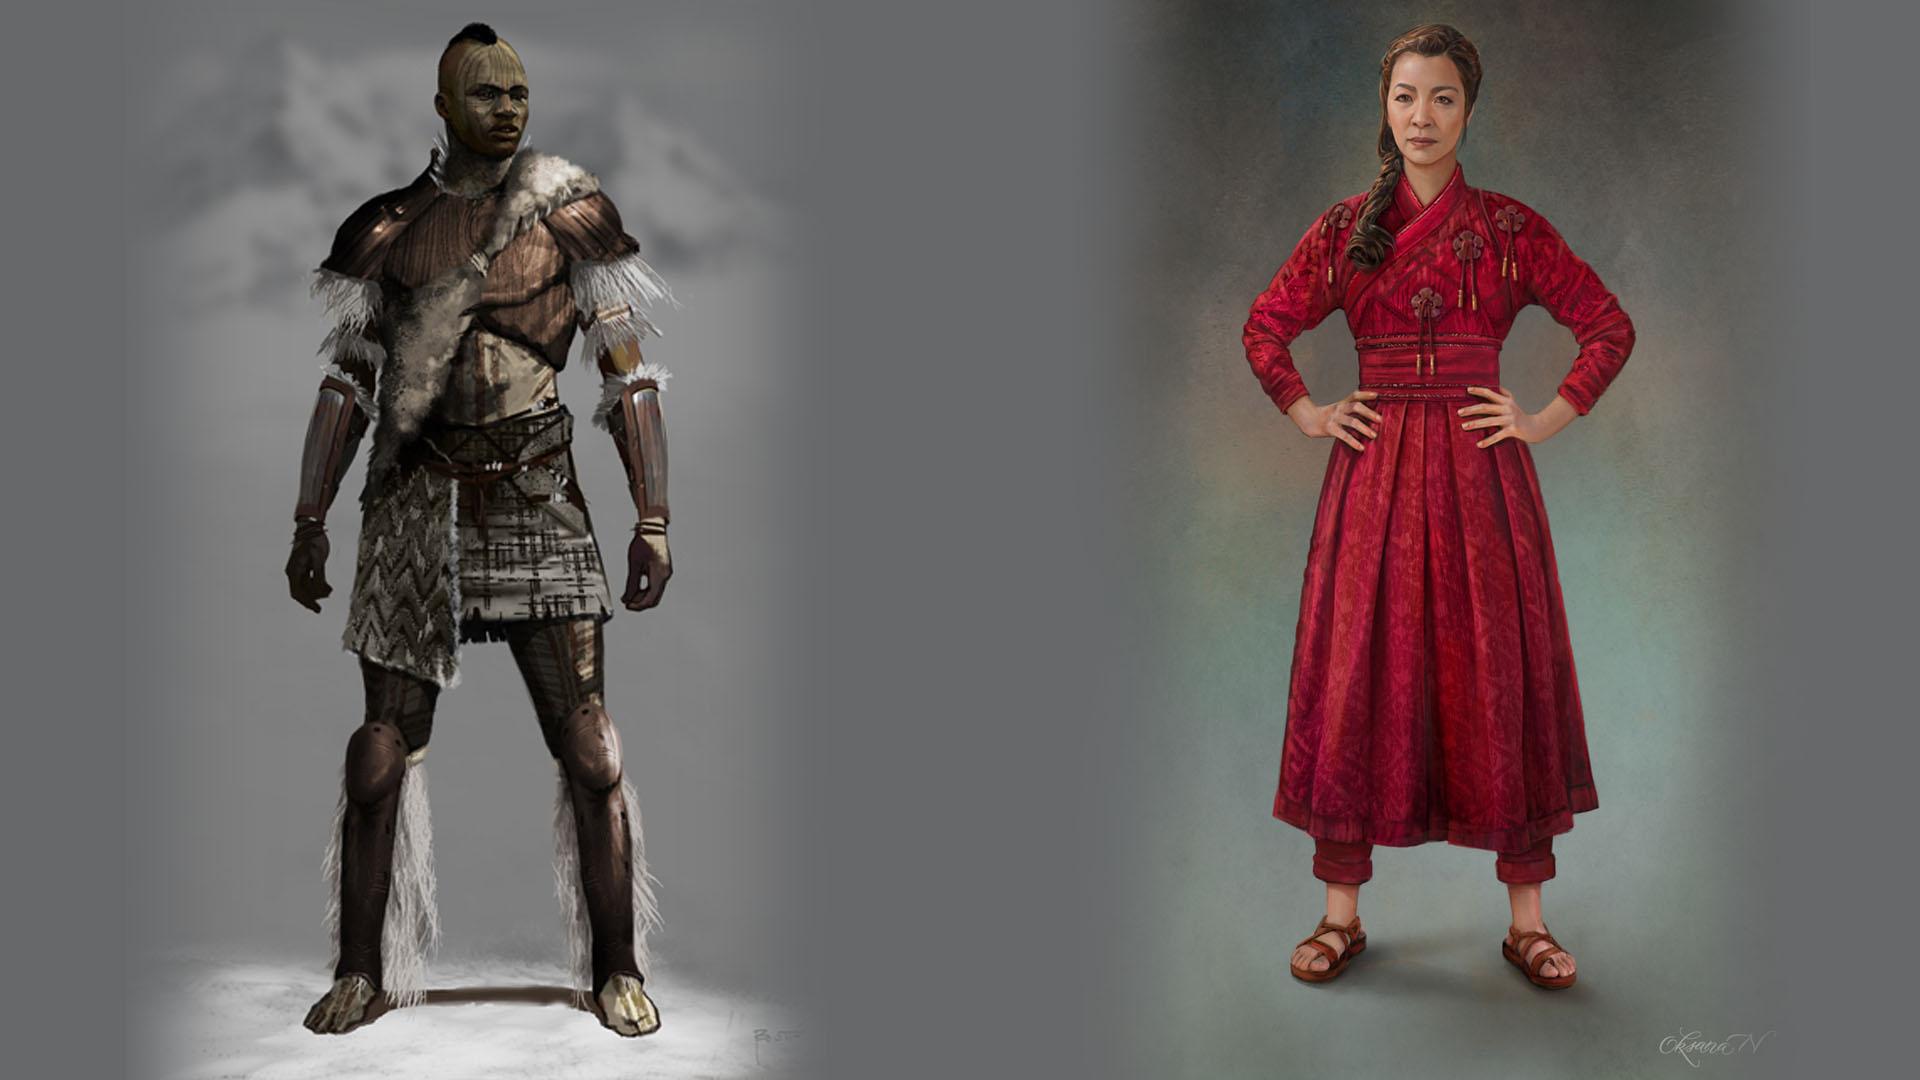 Left: Costume design by Phillip Boutte Jr. Right: Costume design by Oksana Nedavniaya